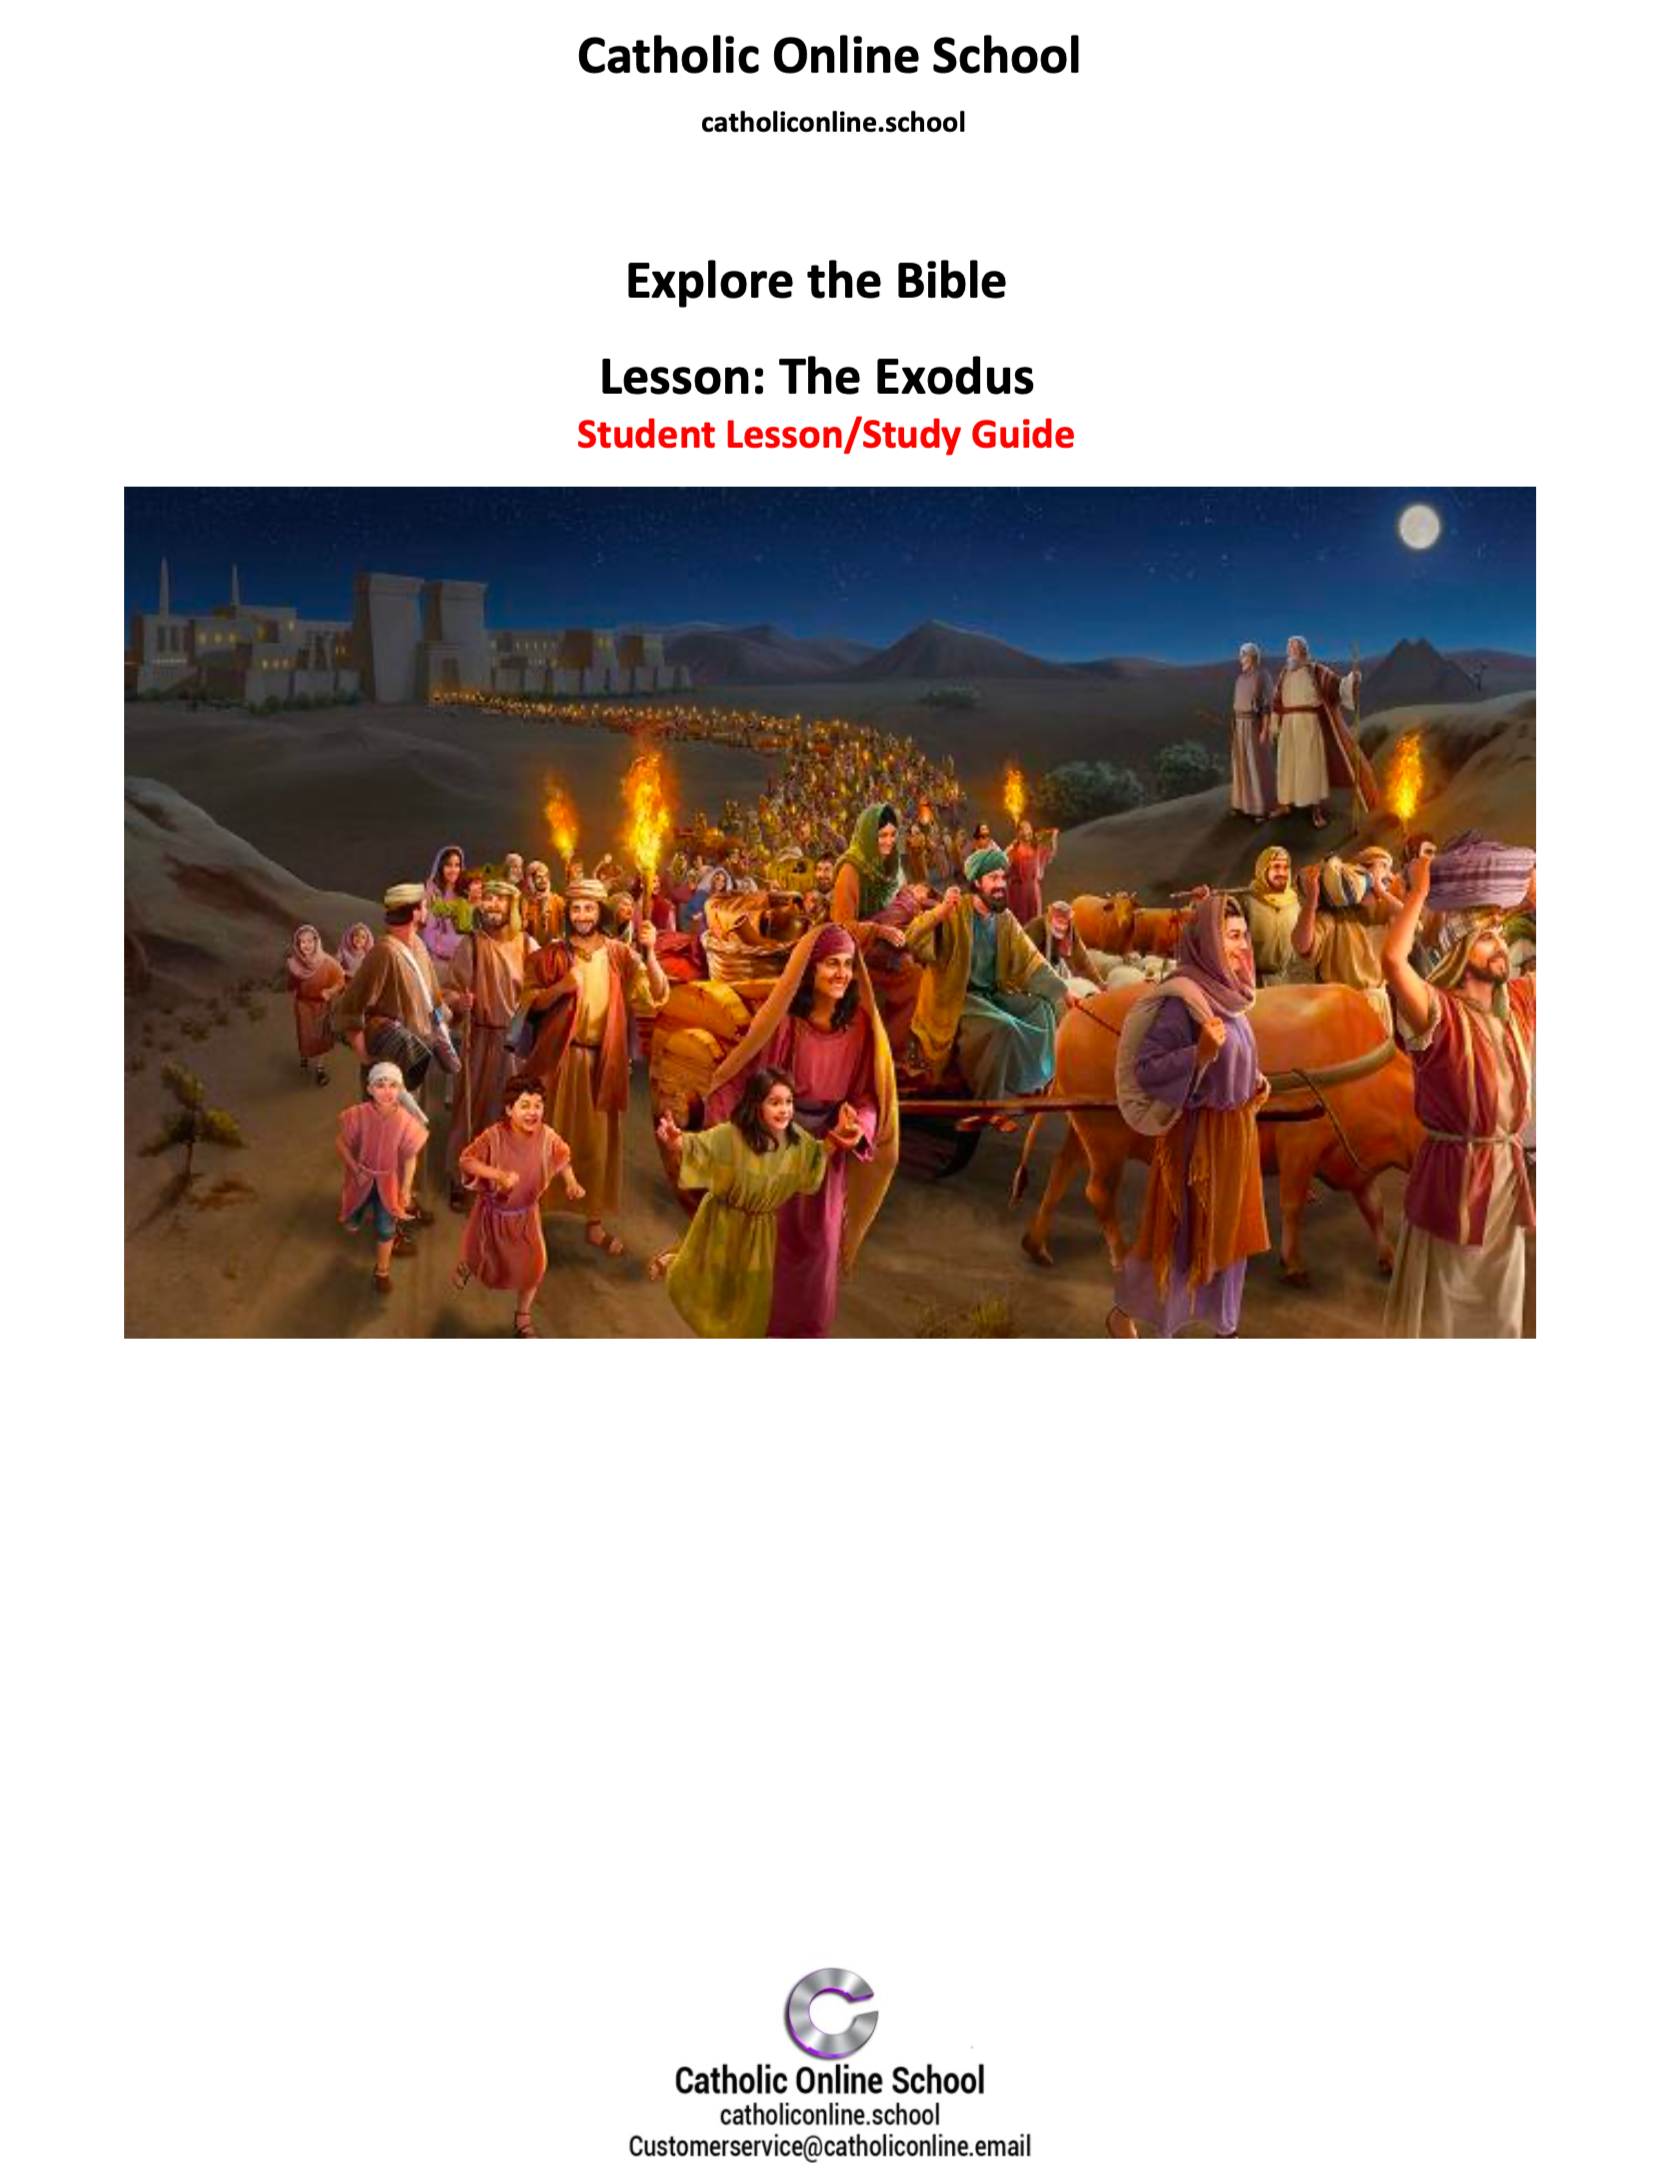 Explore the Bible: The Exodus (Student Lesson/Study Guide) PDF